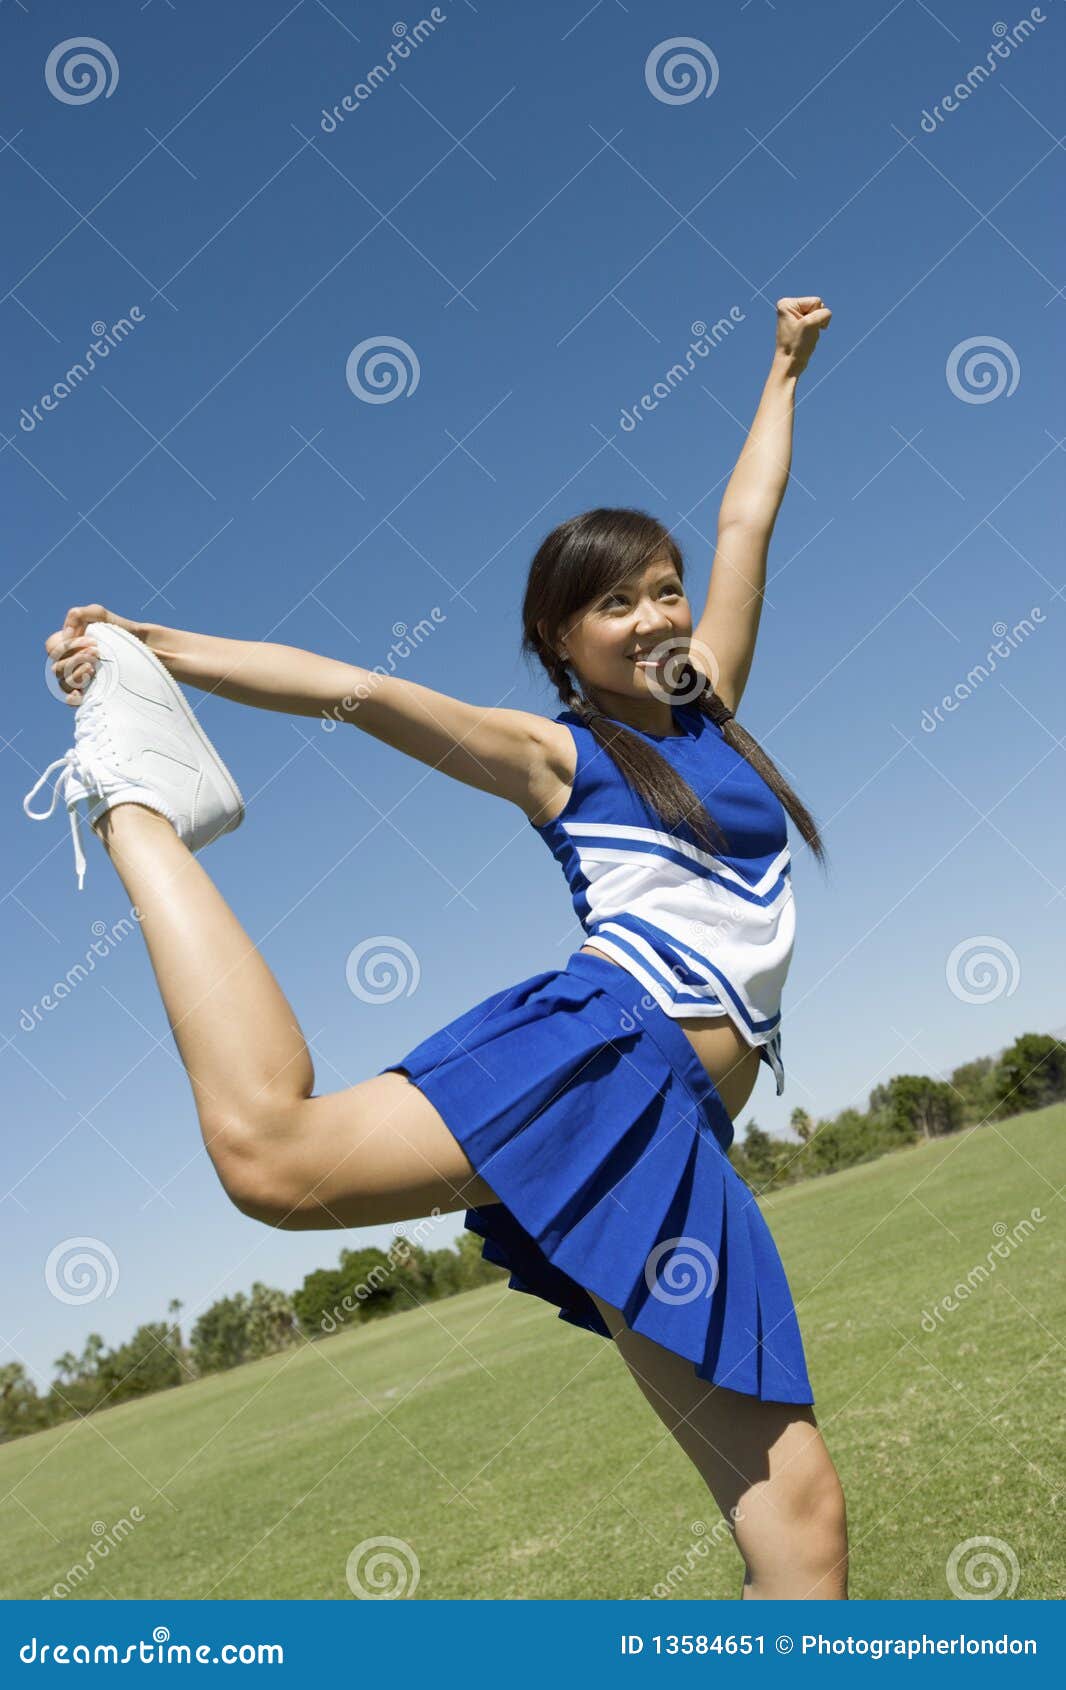 branislav jelic add photo college cheerleaders legs